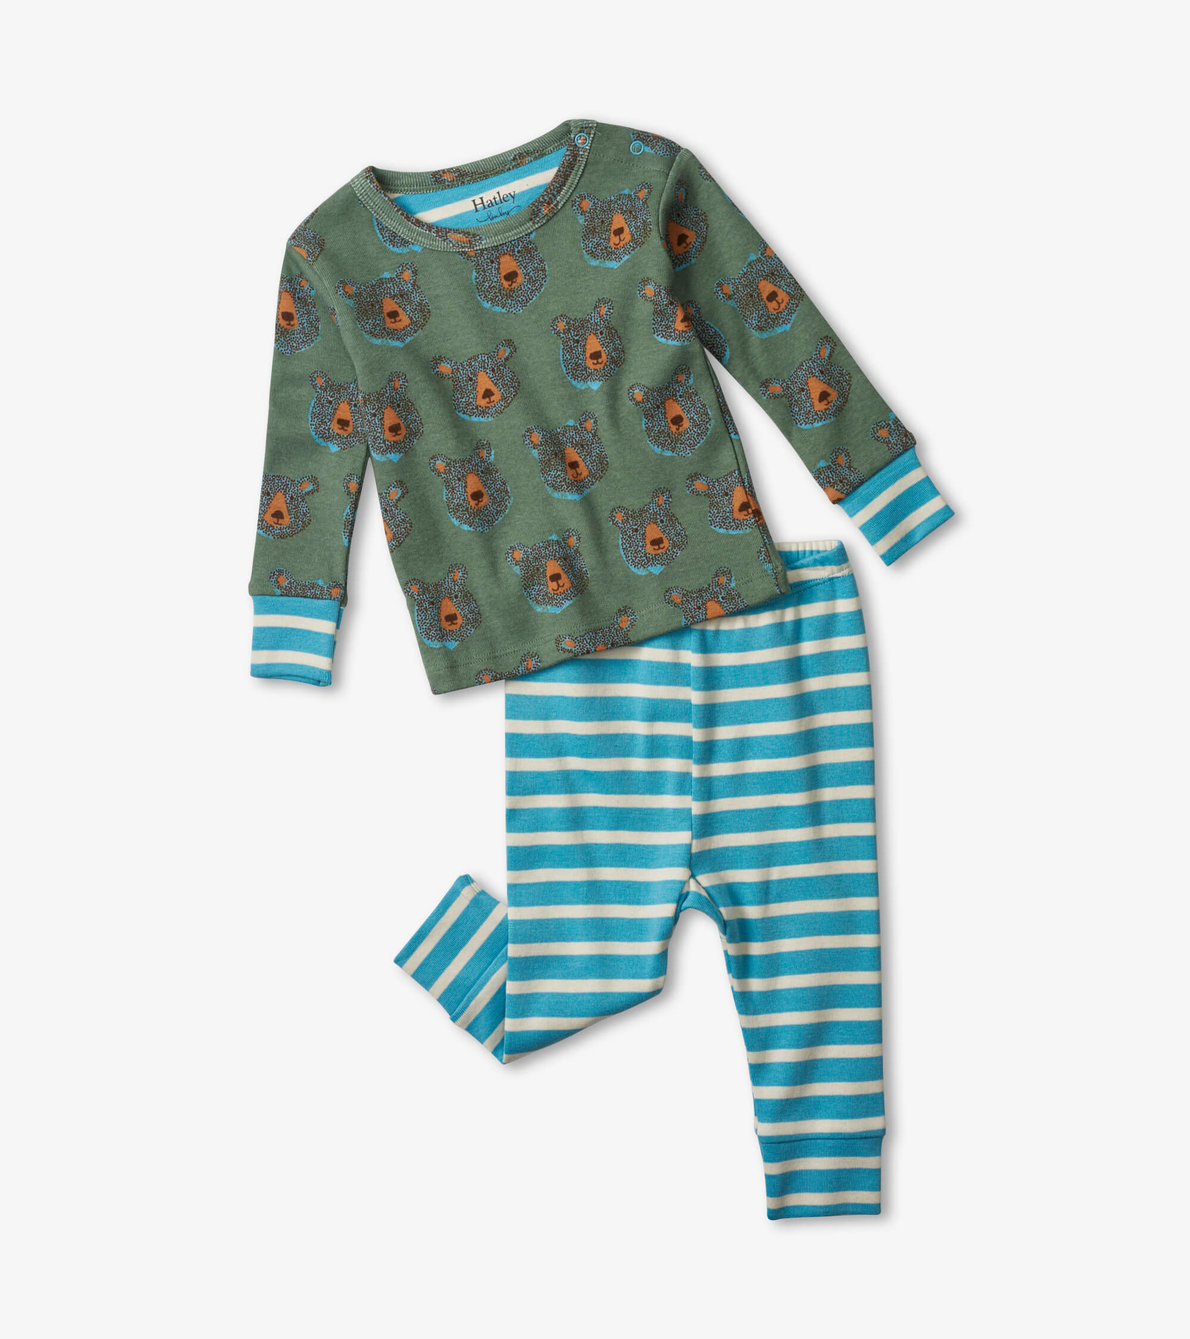 View larger image of Blue Bears Organic Cotton Baby Pajama Set